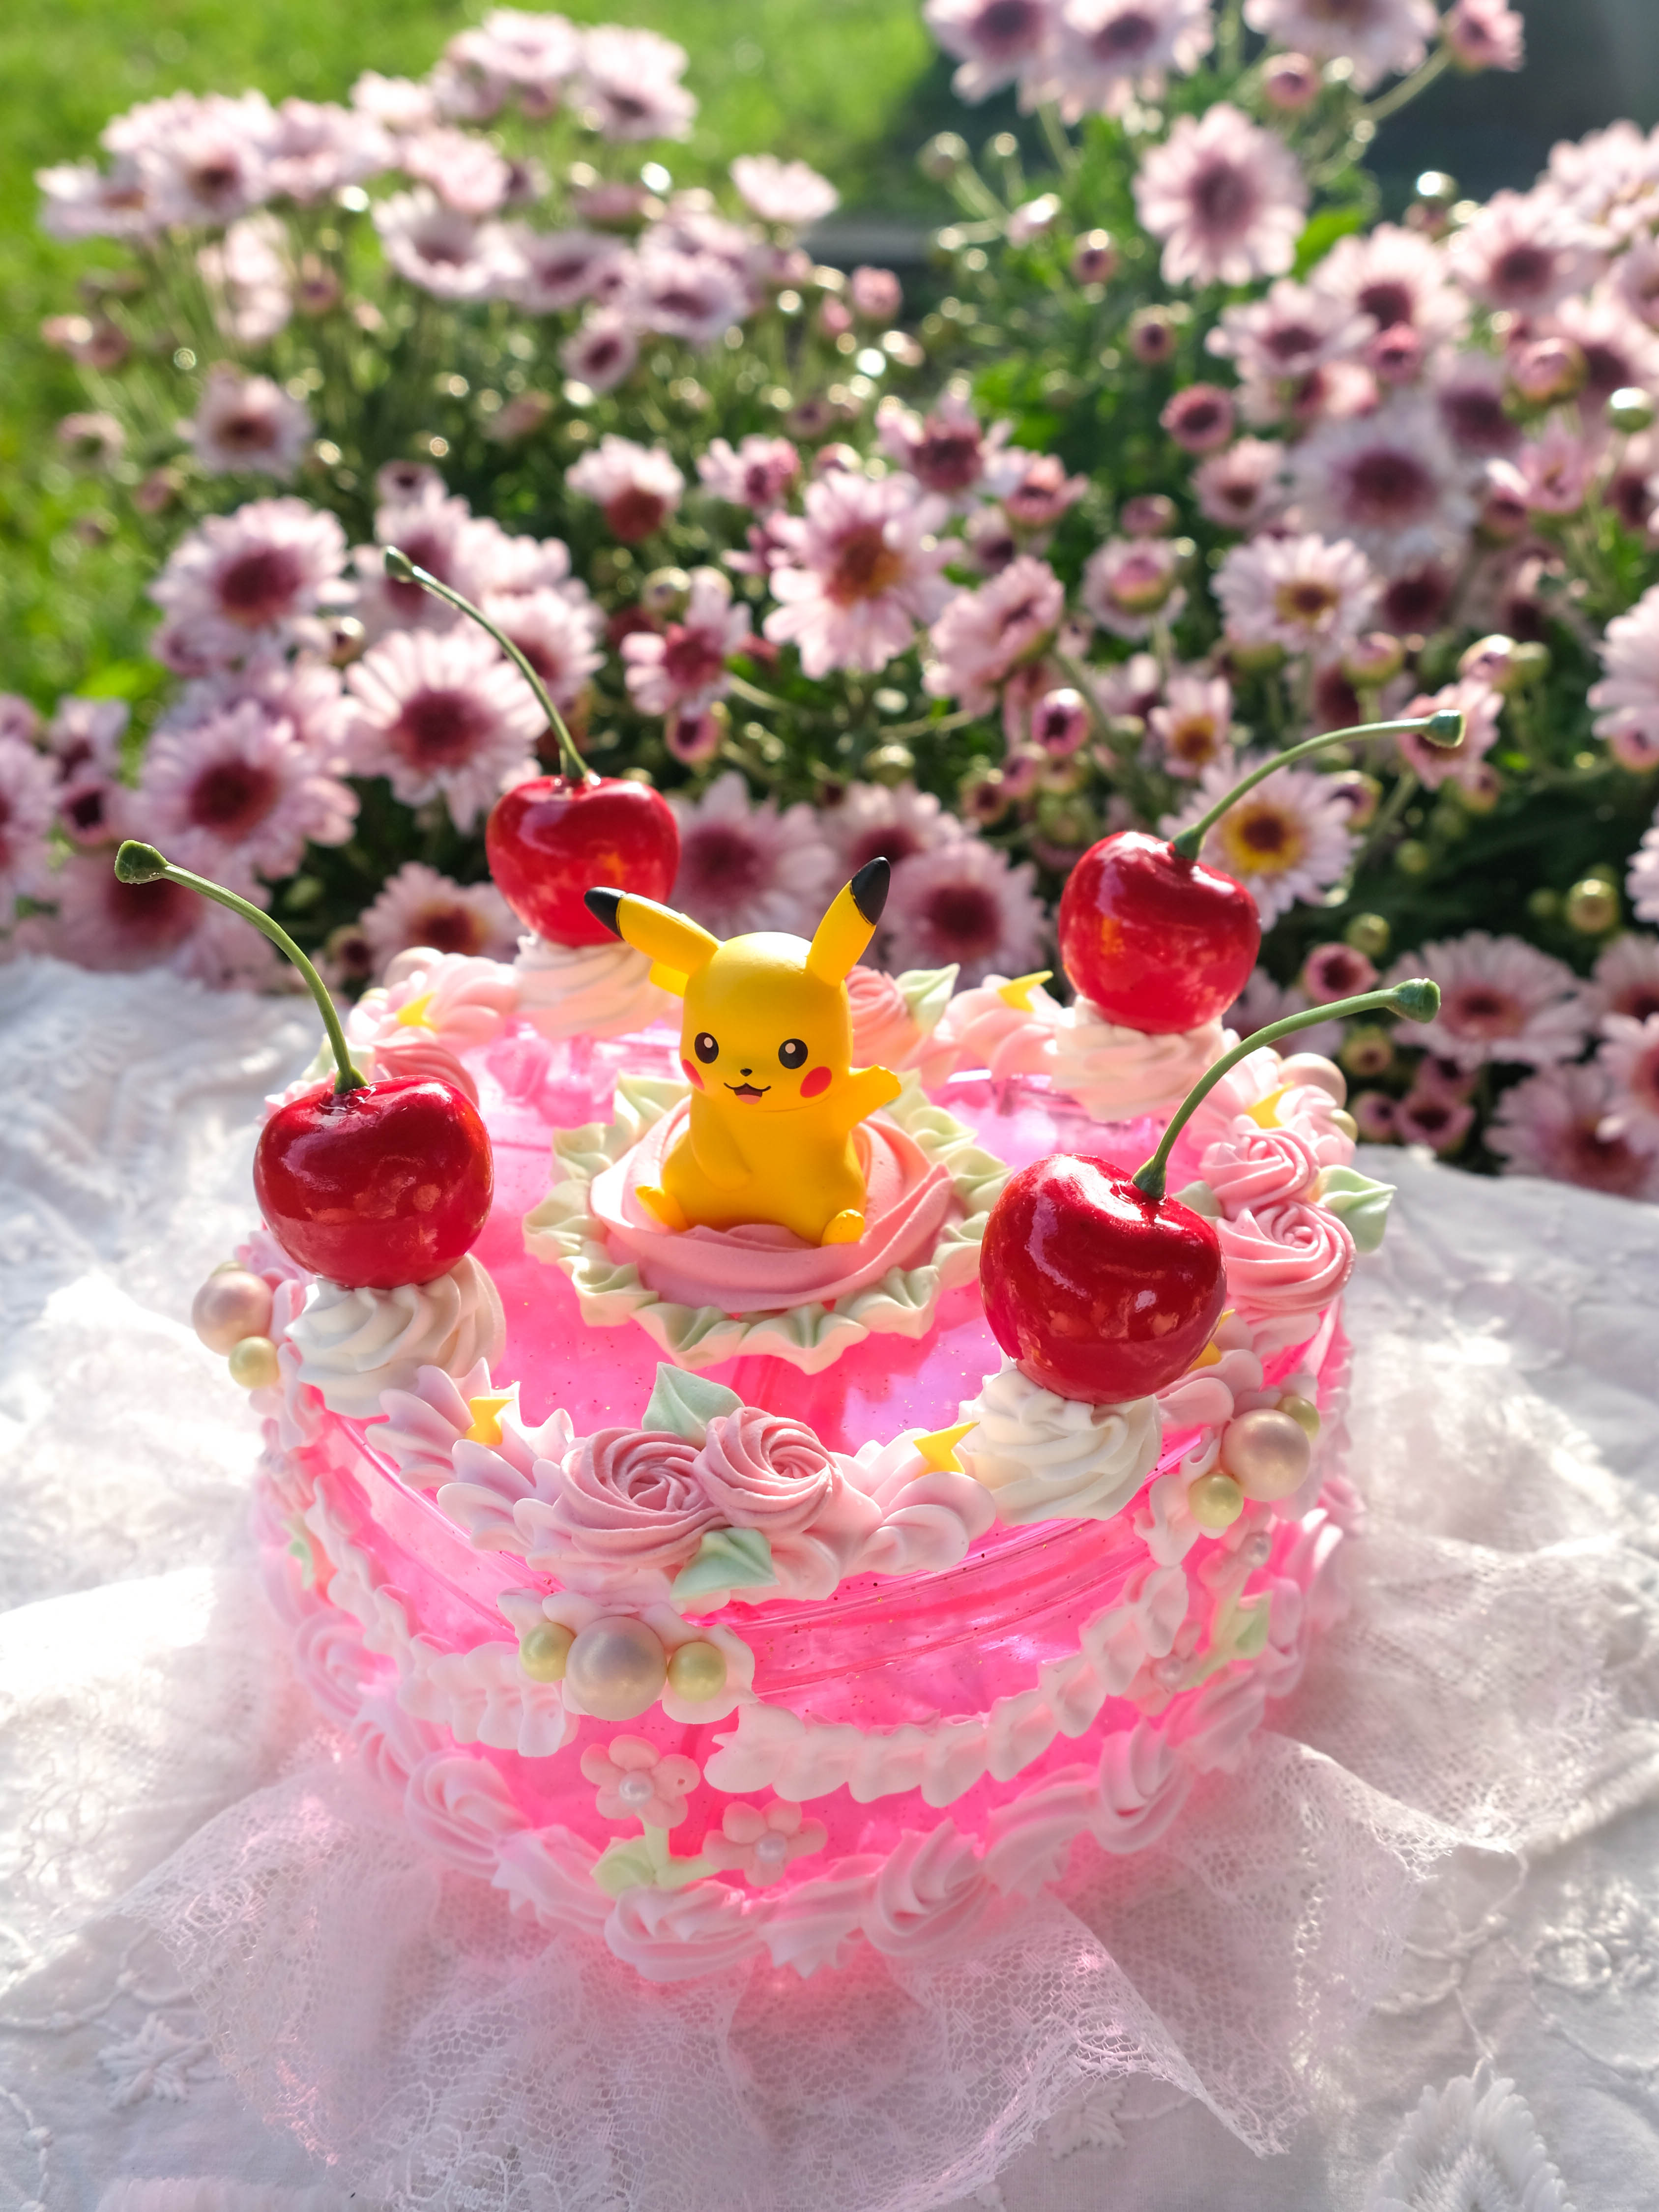 Pikachu Cake Tutorial - Roxy's Kitchen